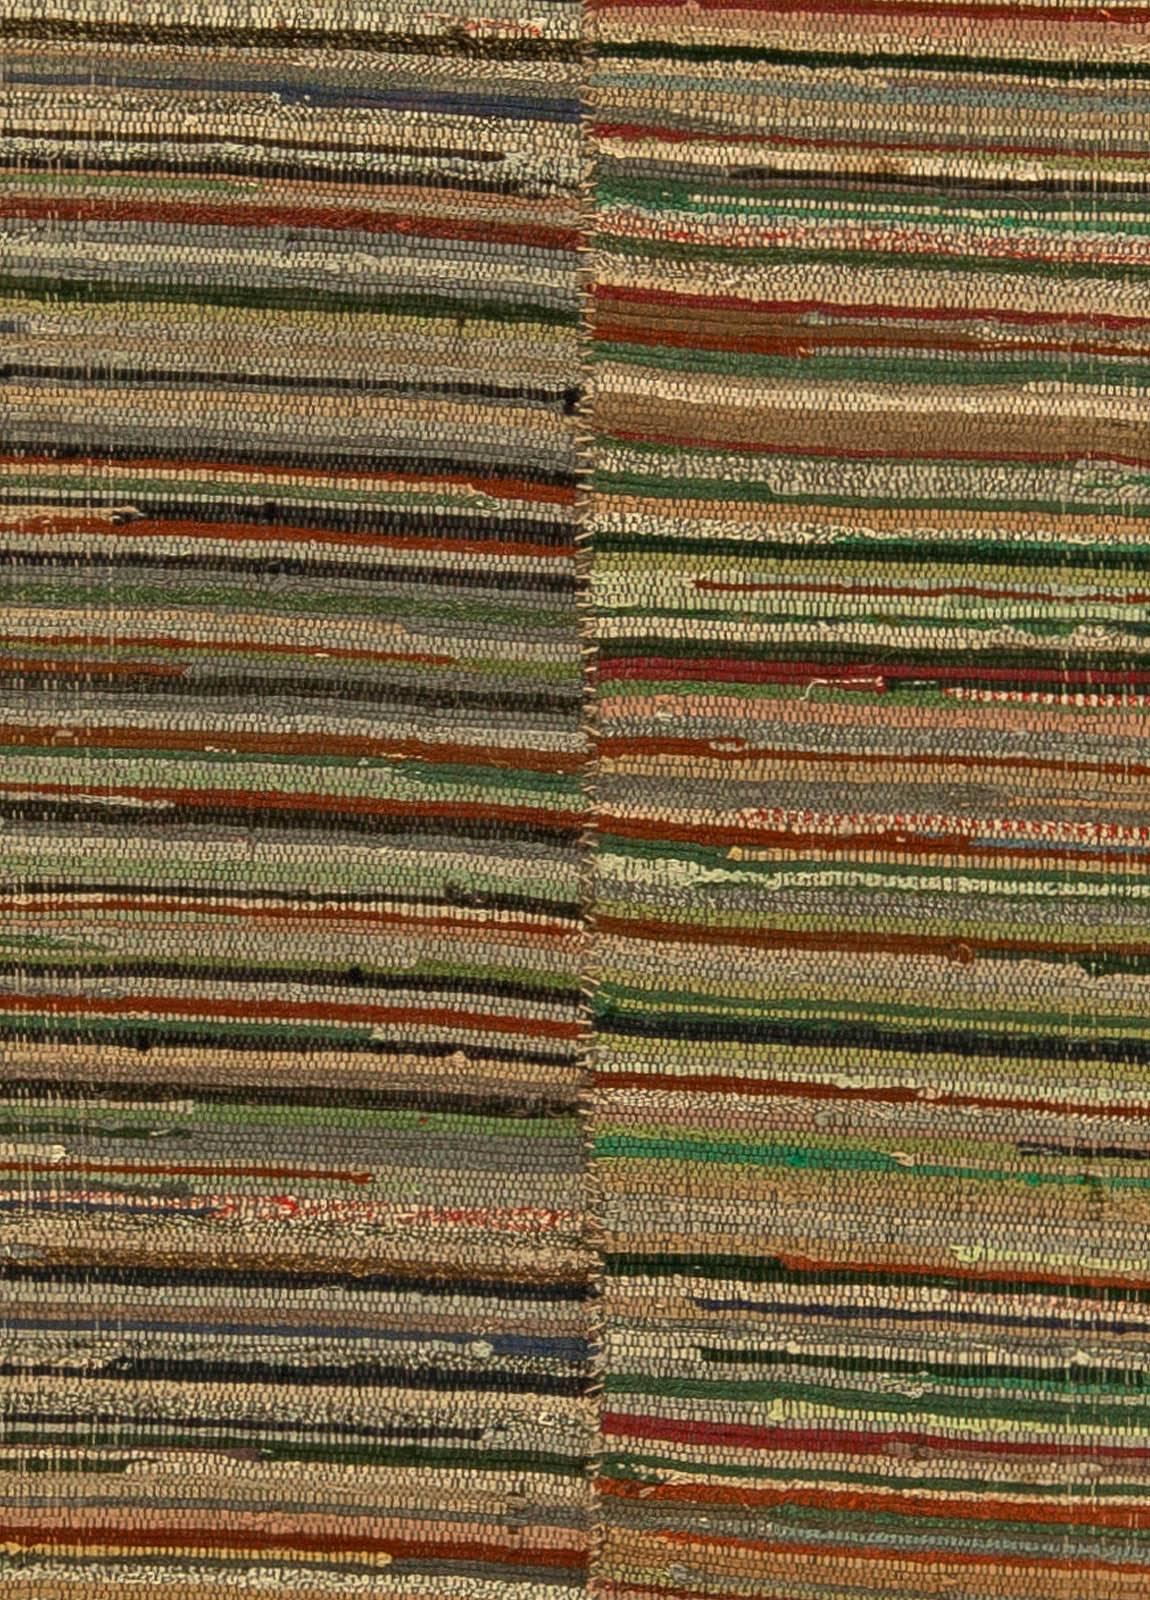 Midcentury geometric handmade wool American Rag rug in red, blue, brown and yellow
Size: 5'8